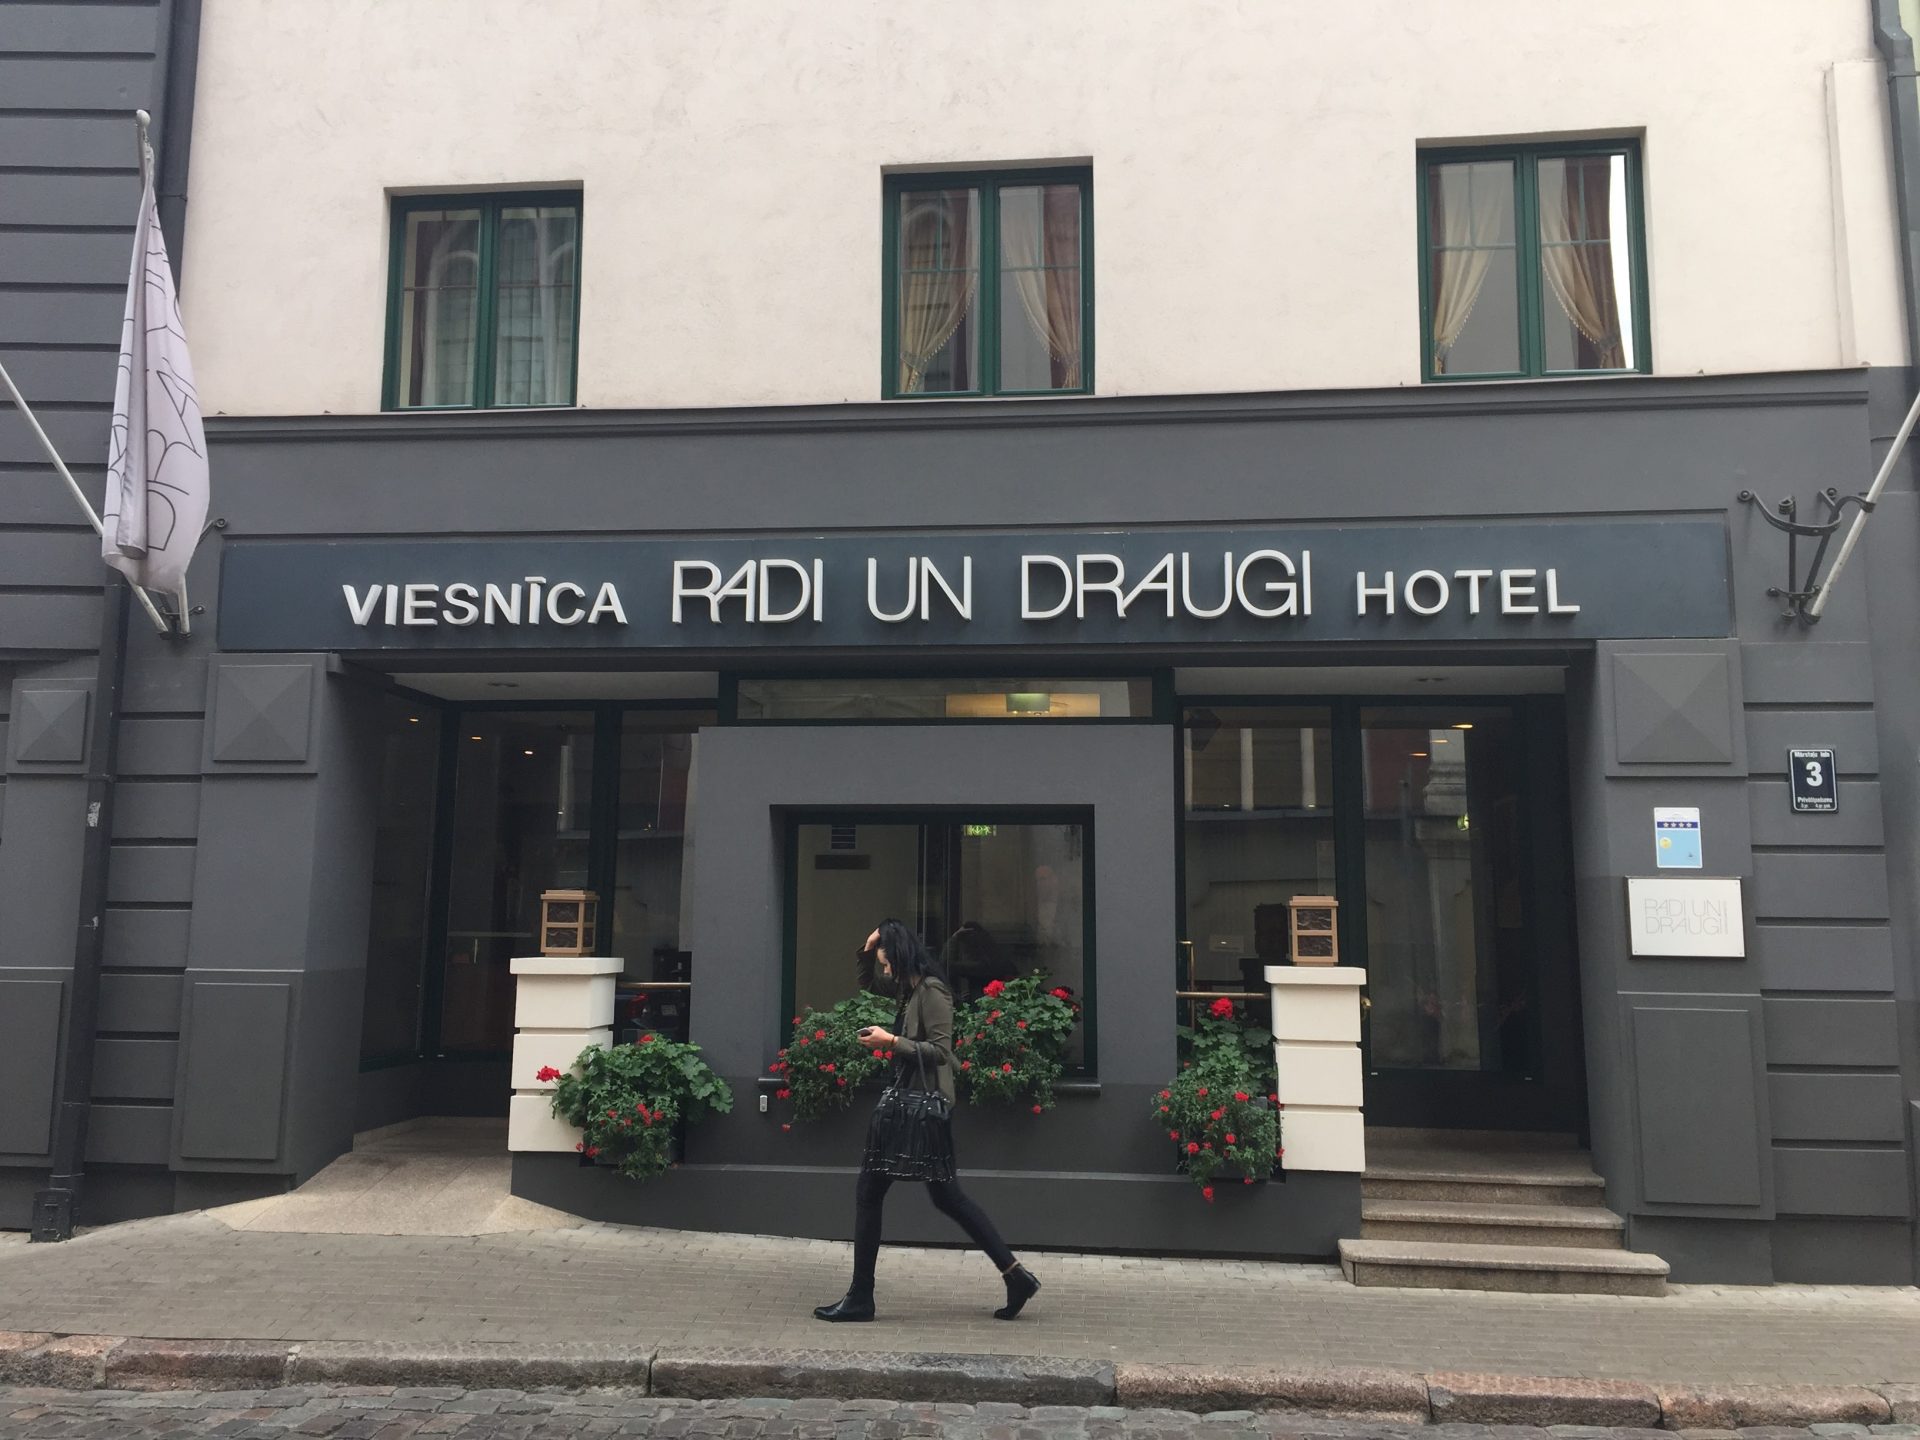 radi un draugi - Radi Un Draugi Hotel Riga, Latvia Review